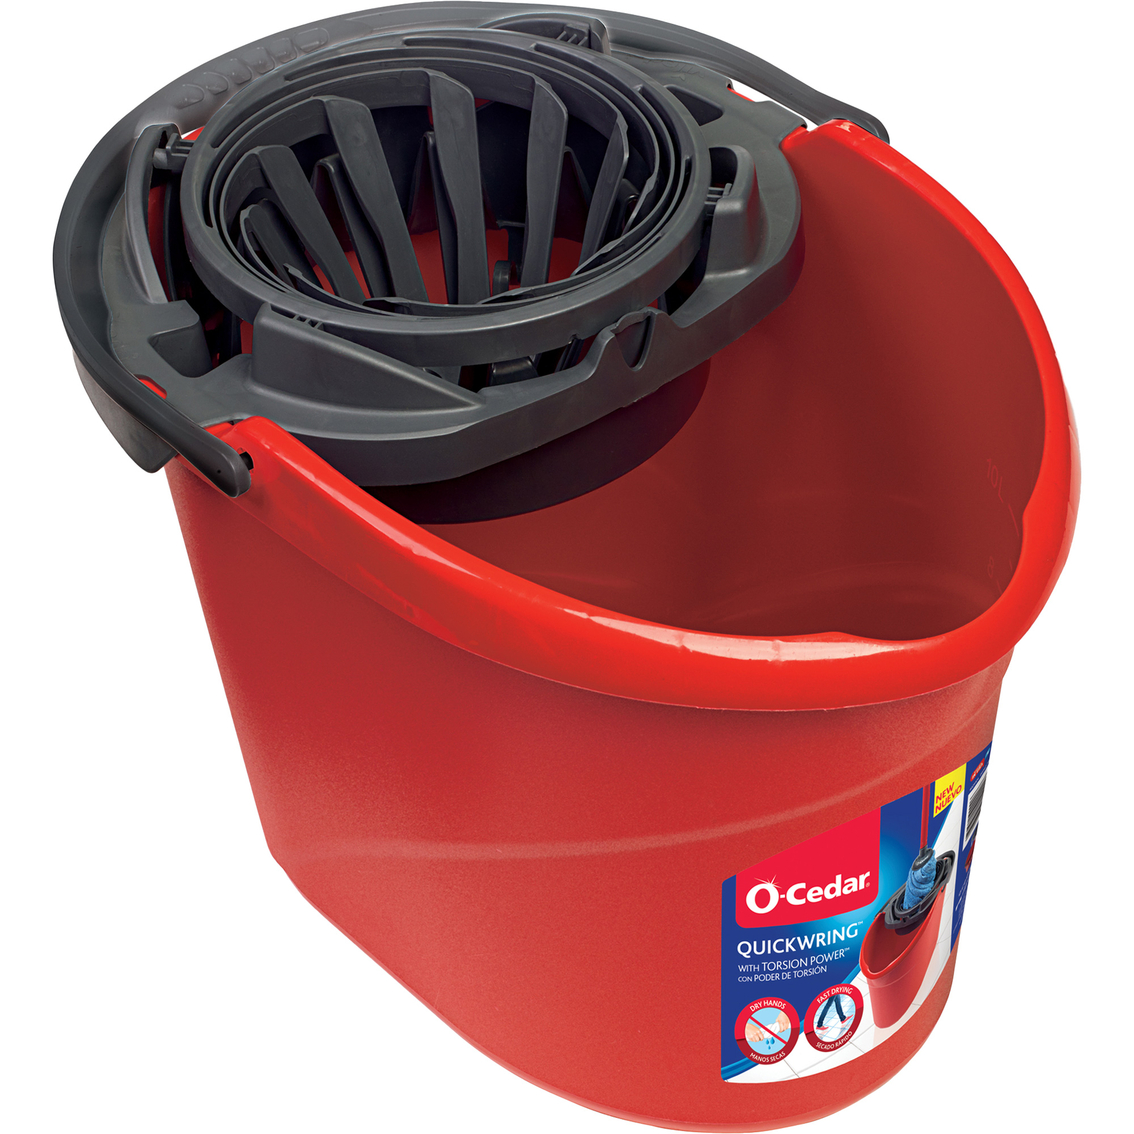 O-Cedar Quick Wring Bucket Torsion Spout Label - Image 2 of 3